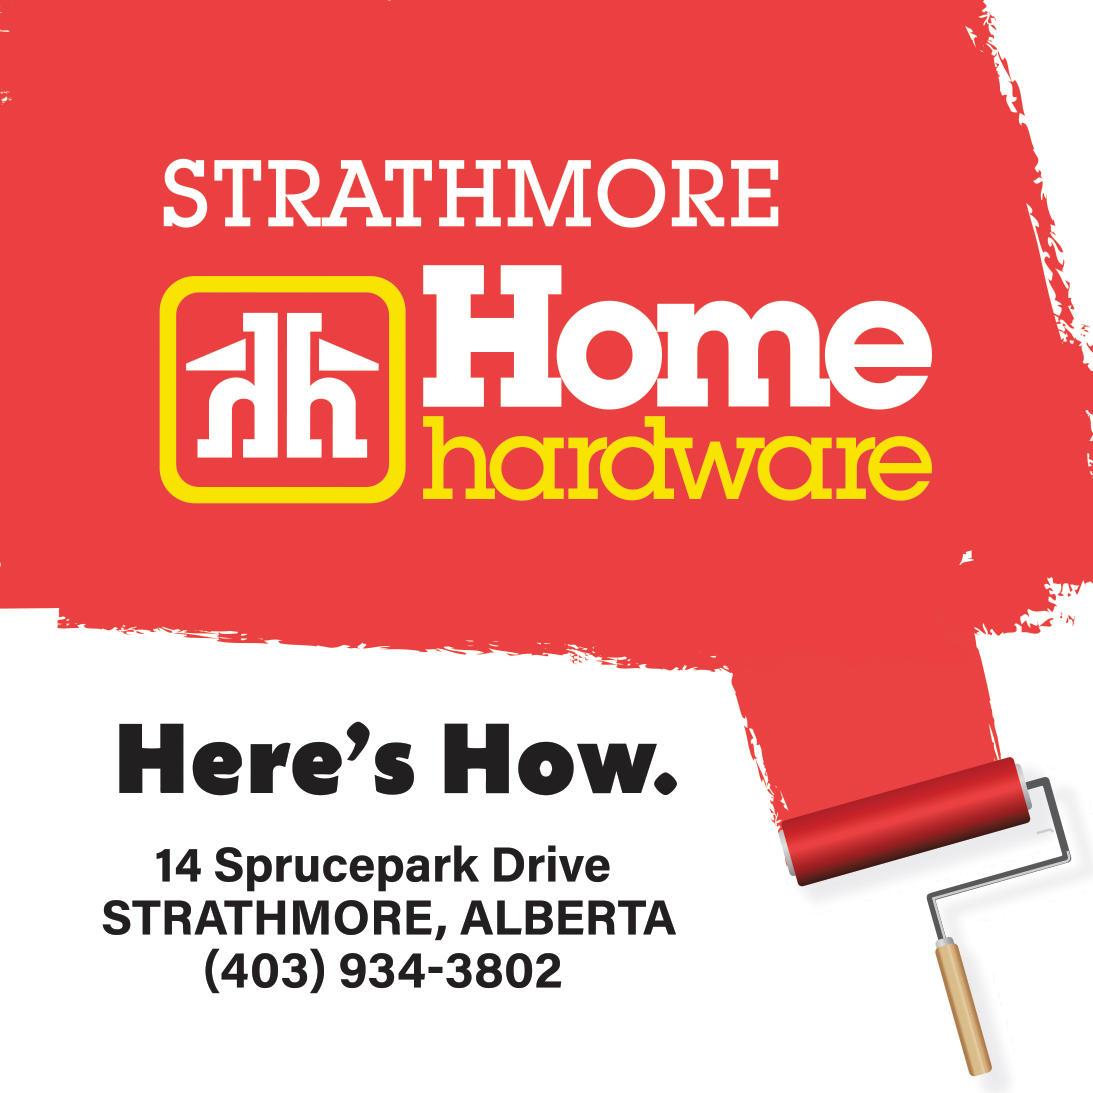 Strathmore Home Hardware